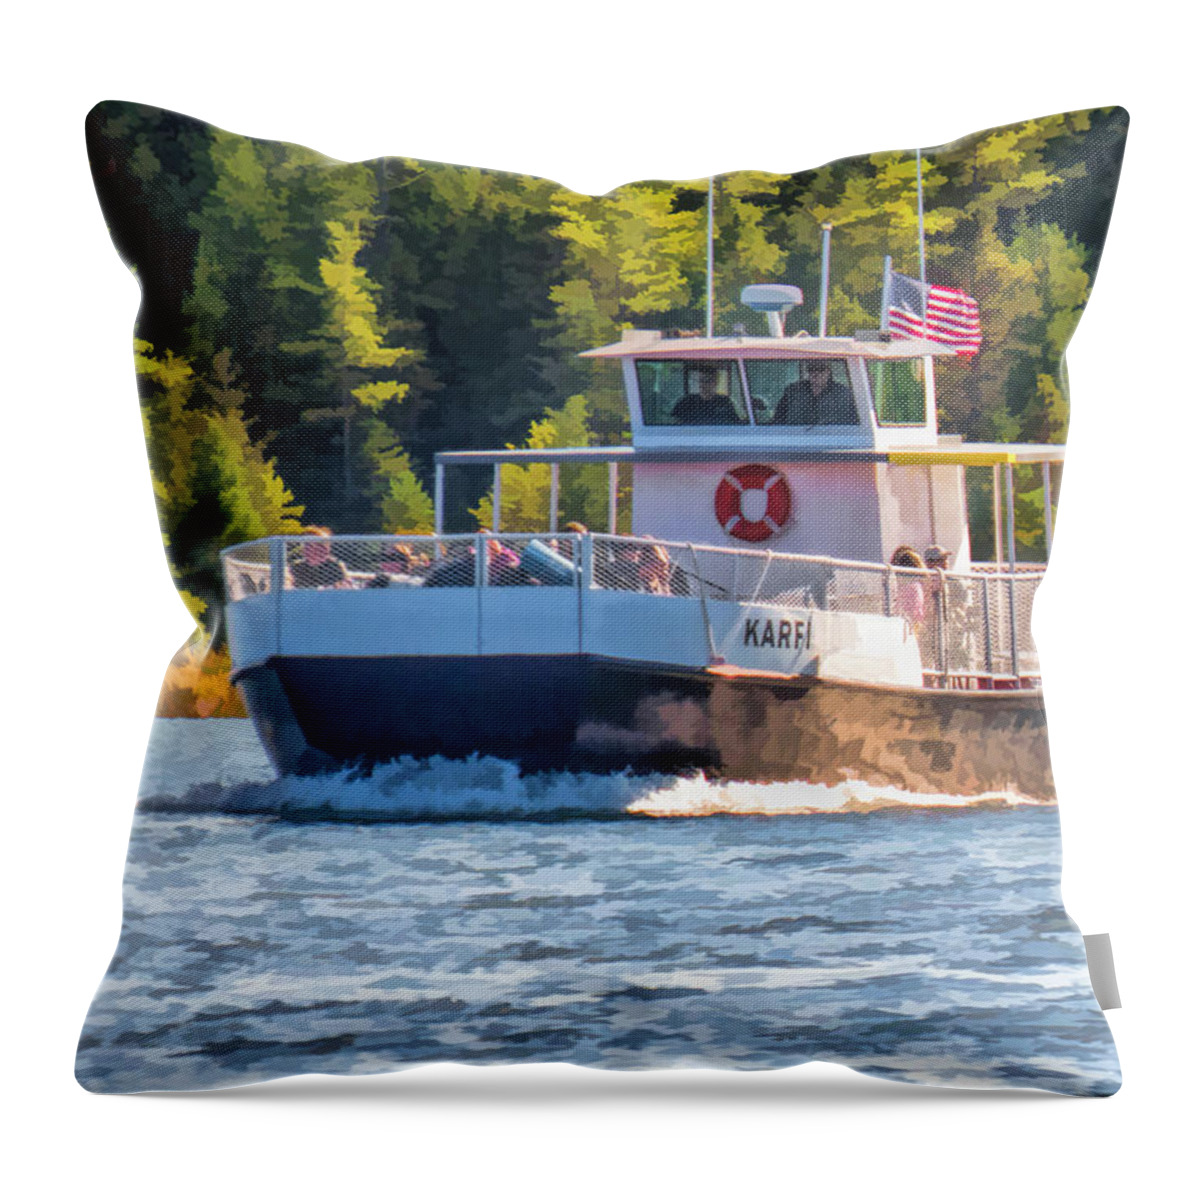 Door County Throw Pillow featuring the painting Rock Island Karfi Ferry in Door County by Christopher Arndt